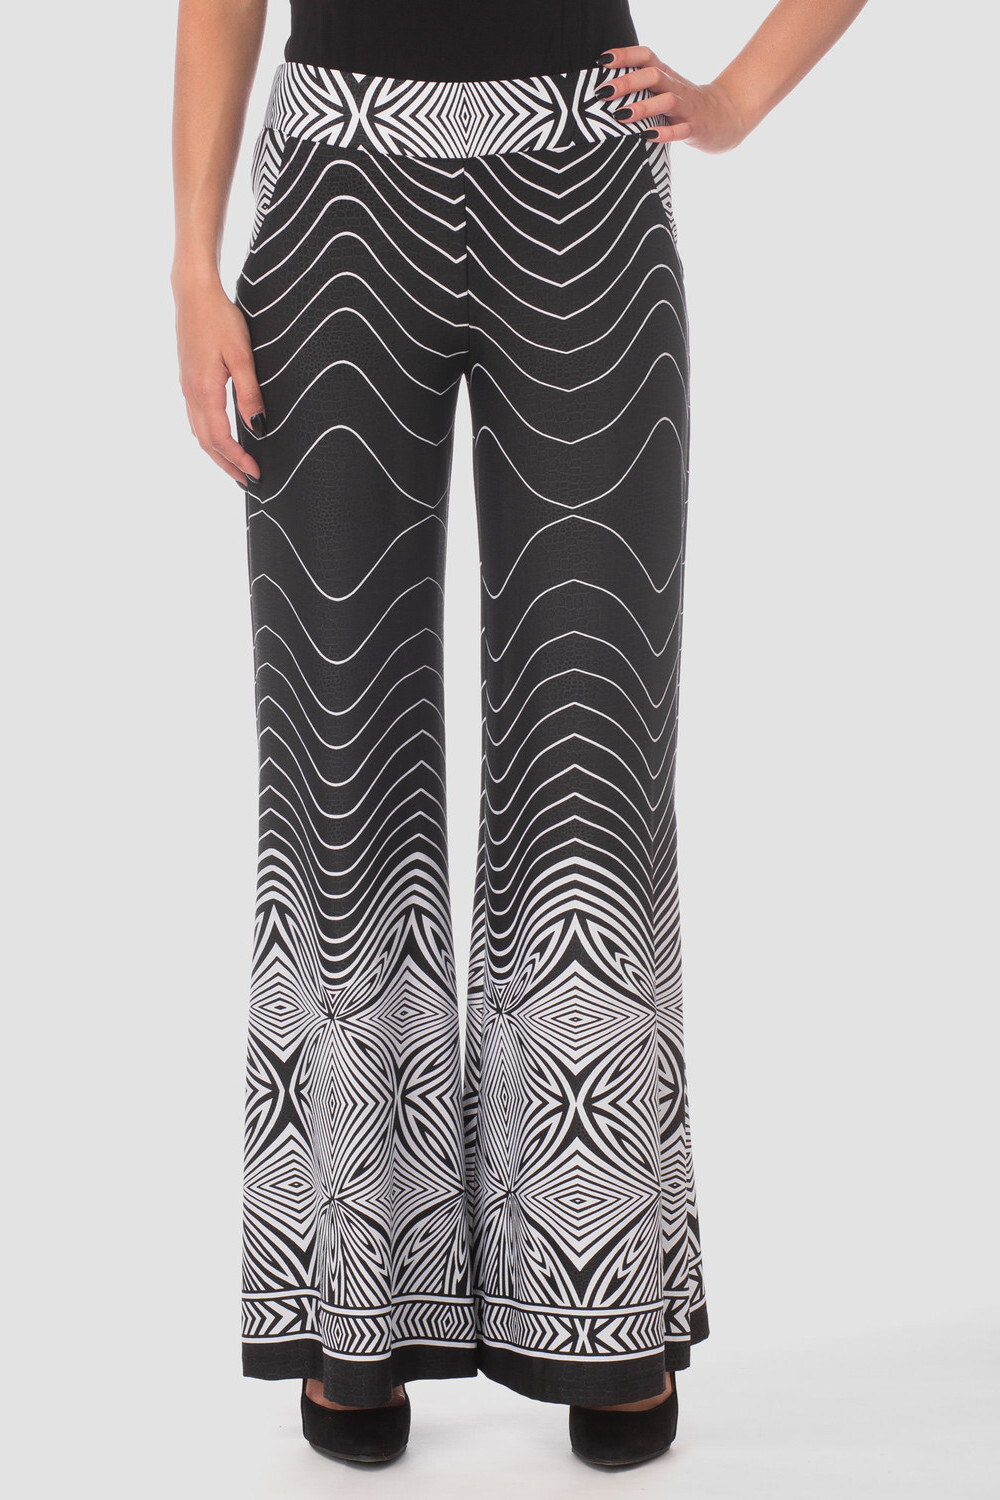 Joseph Ribkoff pantalon style 173856. Noir/blanc